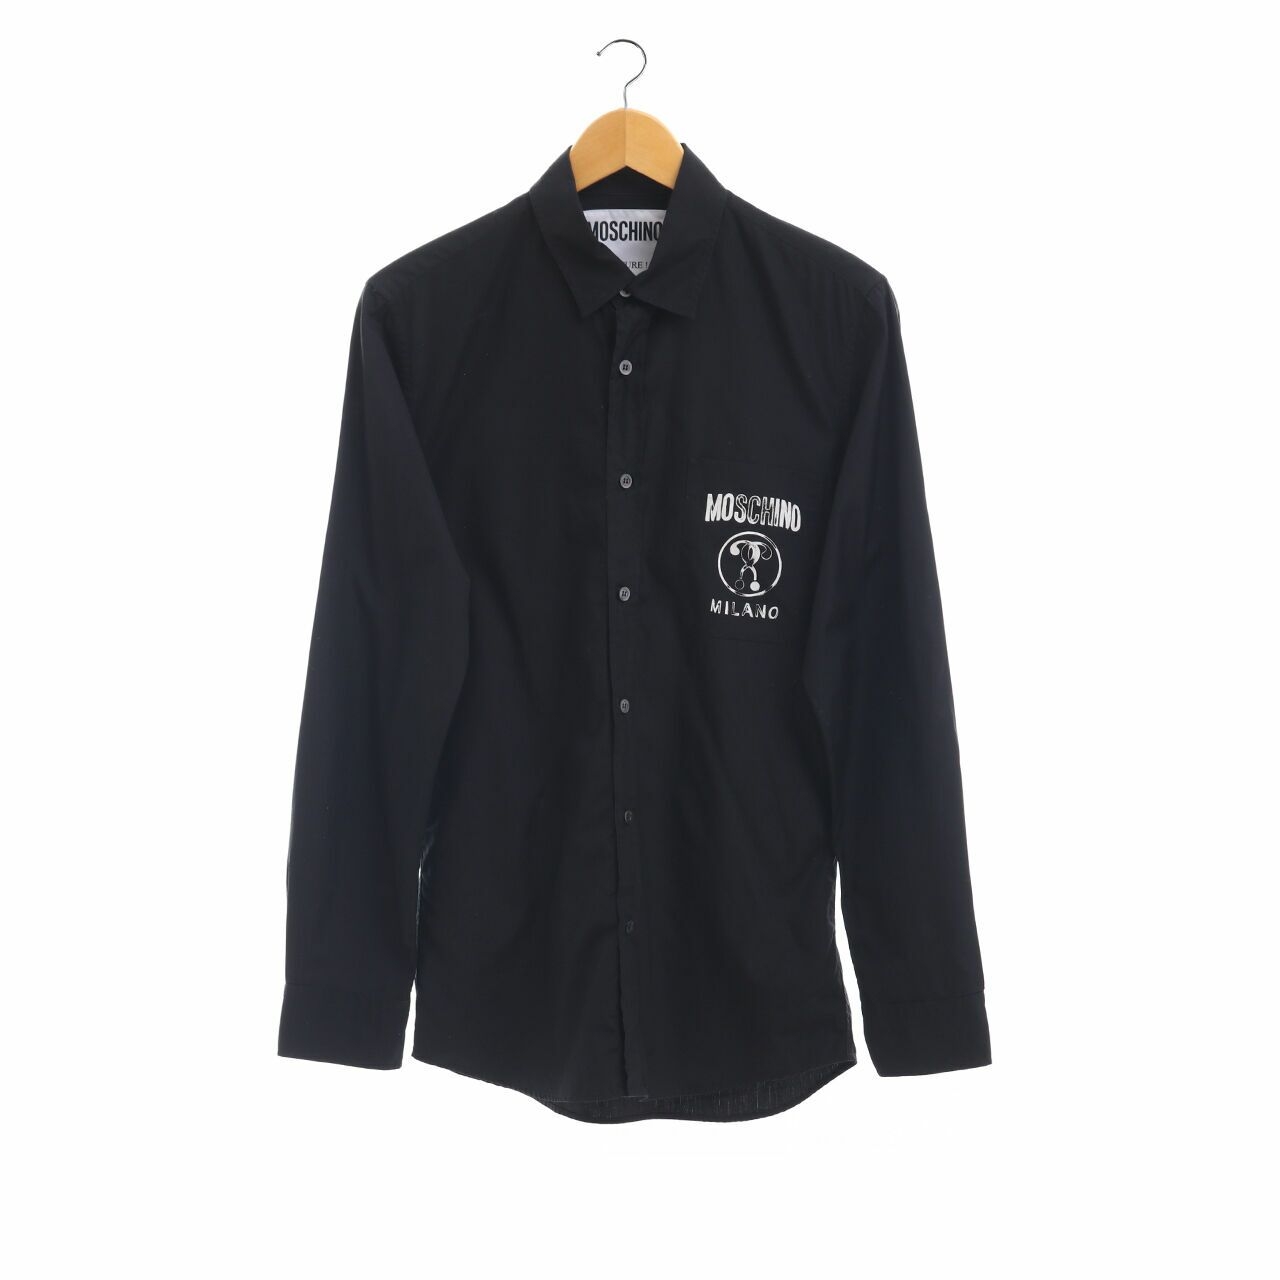 Moschino Black Long Sleeve Shirt